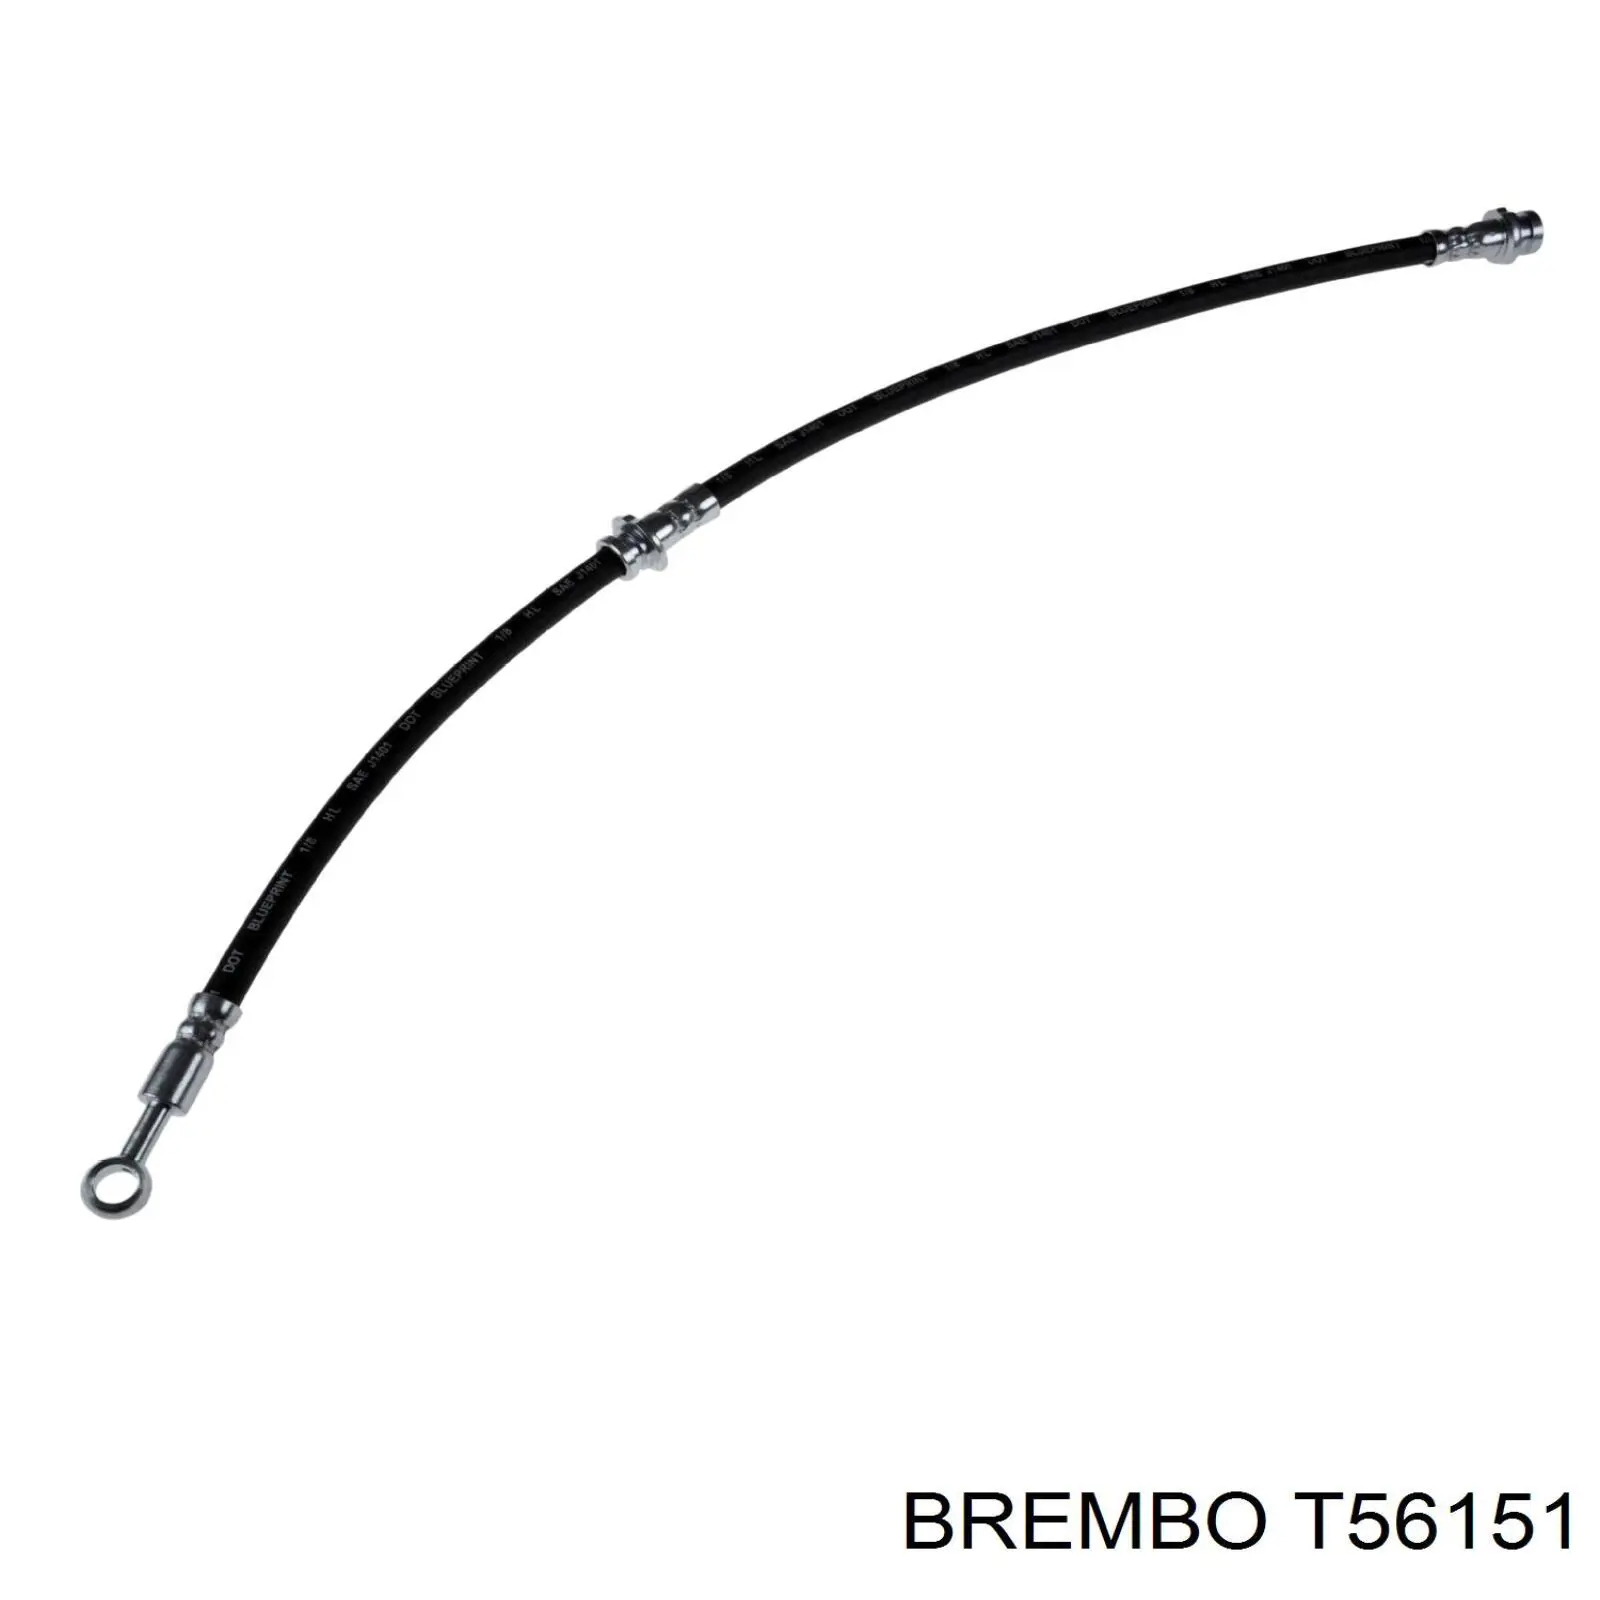 T56151 Brembo latiguillo de freno trasero izquierdo